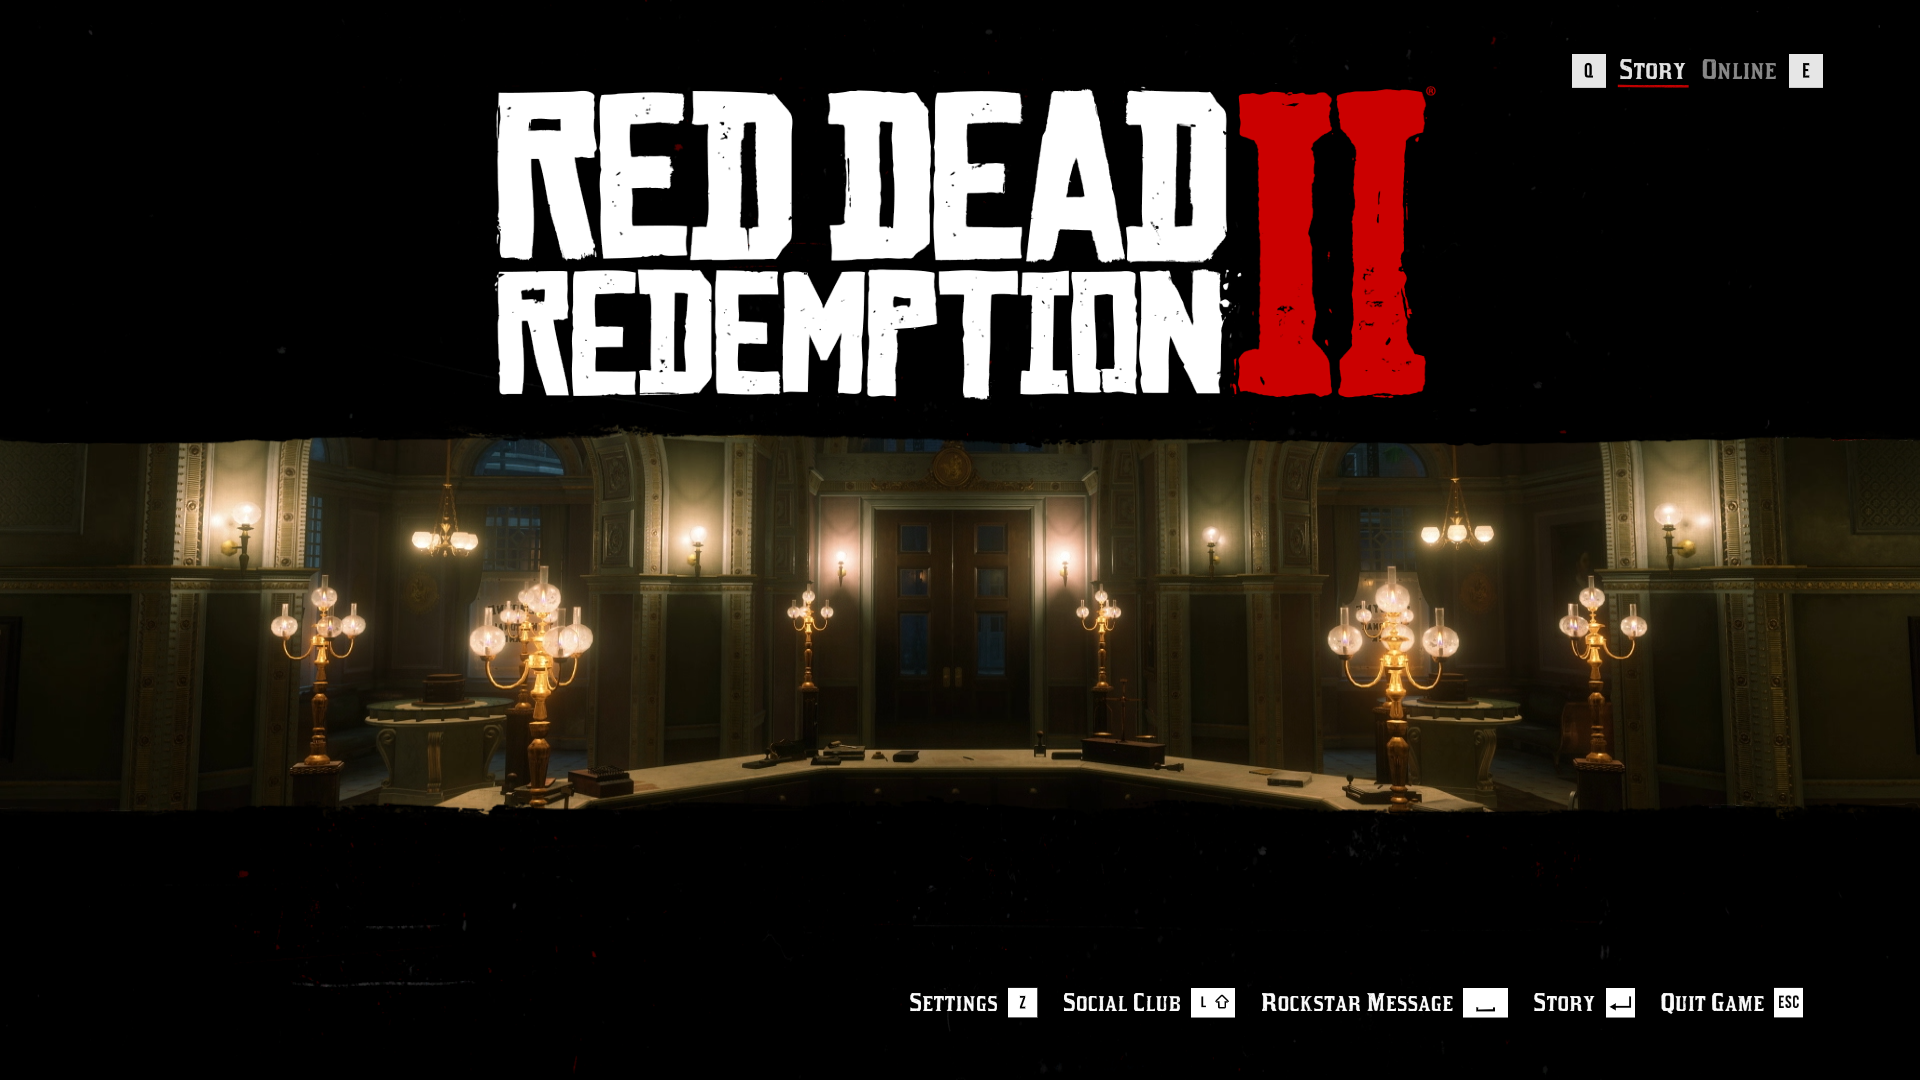 Red Dead Redemption 2 Image 21-10-2022 19-30-53-743.png